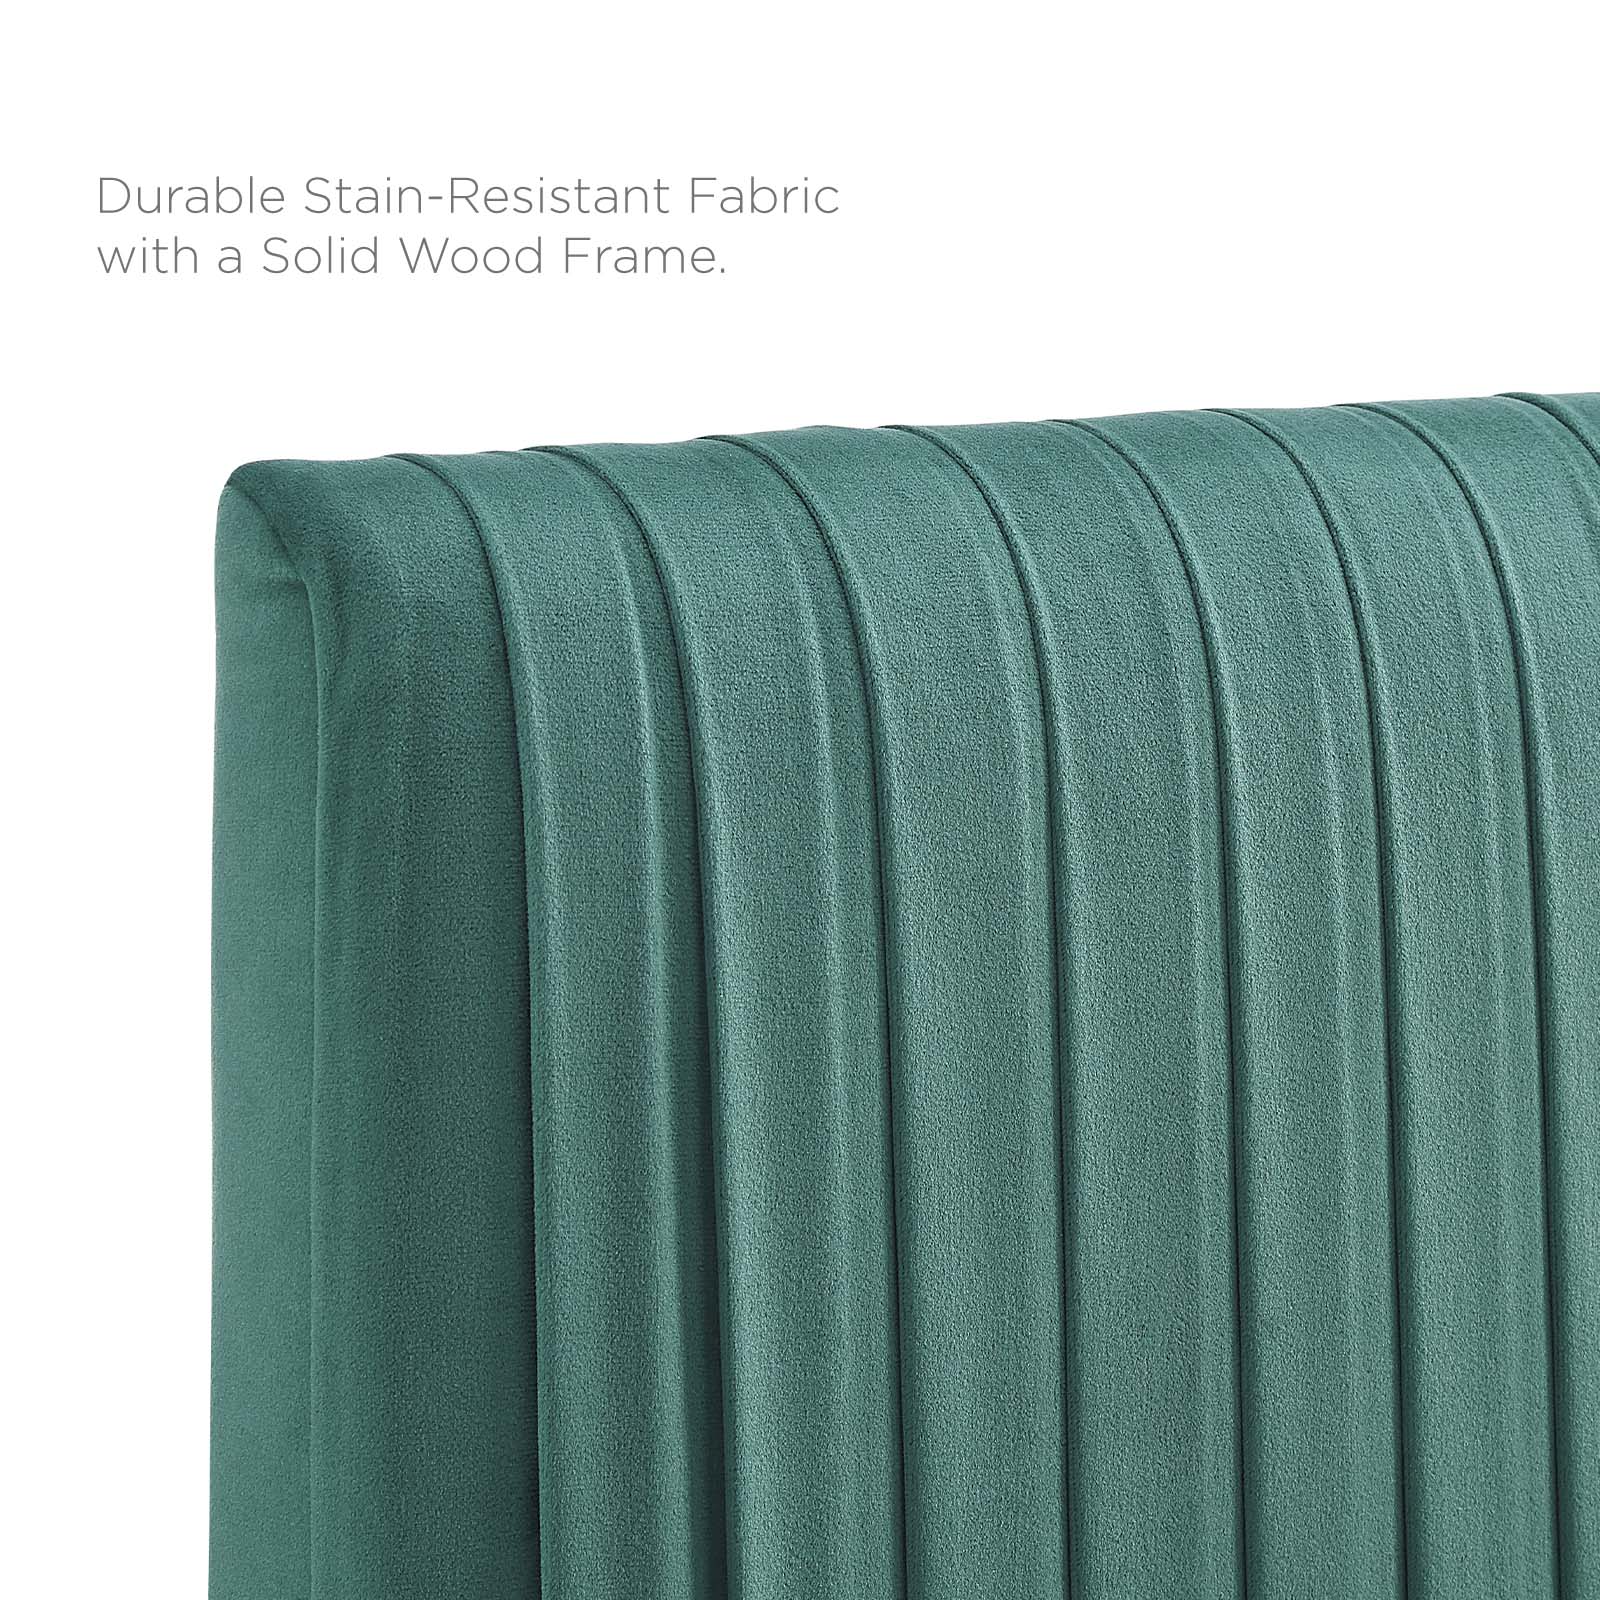 Peyton Performance Velvet Platform Bed with Wood Legs and Metal Sleeves - East Shore Modern Home Furnishings